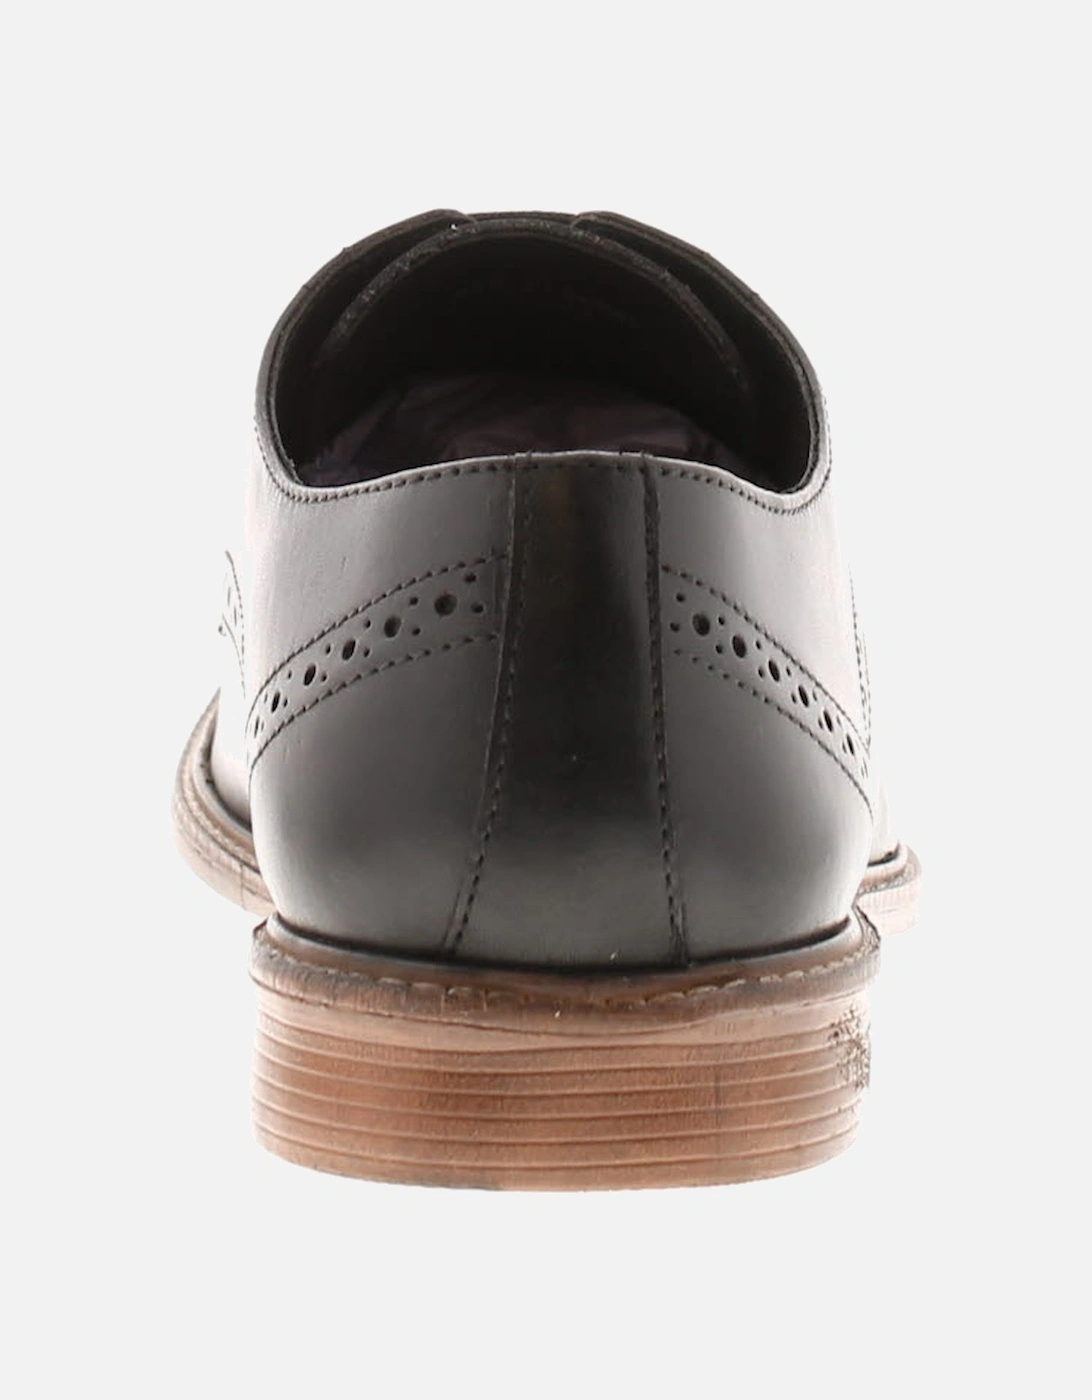 Mens Smart Derby Shoes Harry Leather Lace Up black UK Size